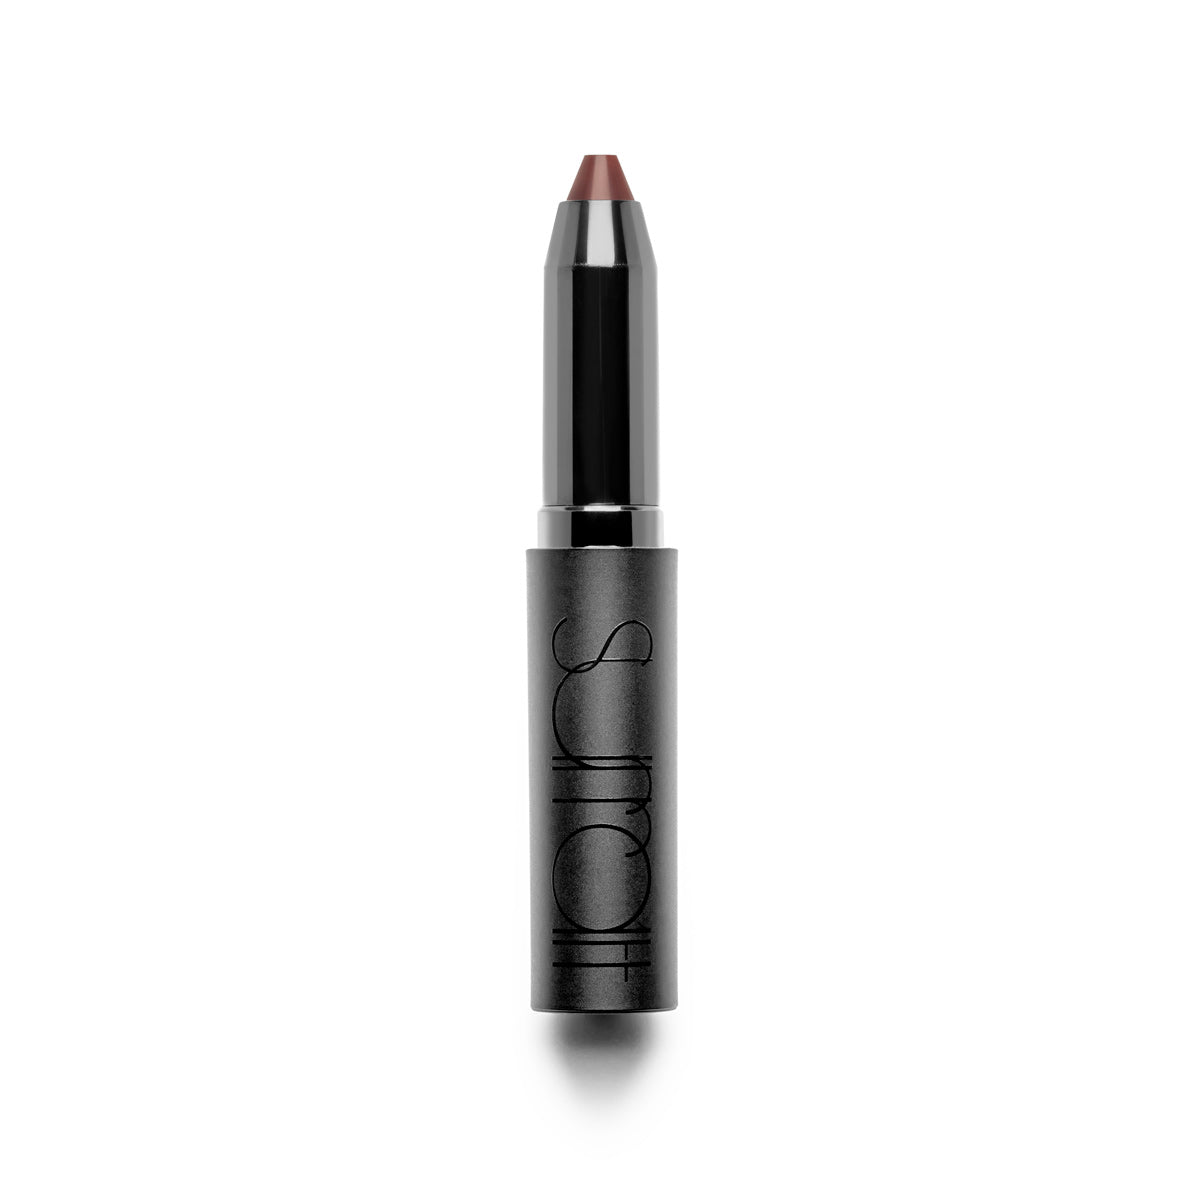 MAHOGANY - REDDISH BROWN - oxblood long-wearing matte lipstick